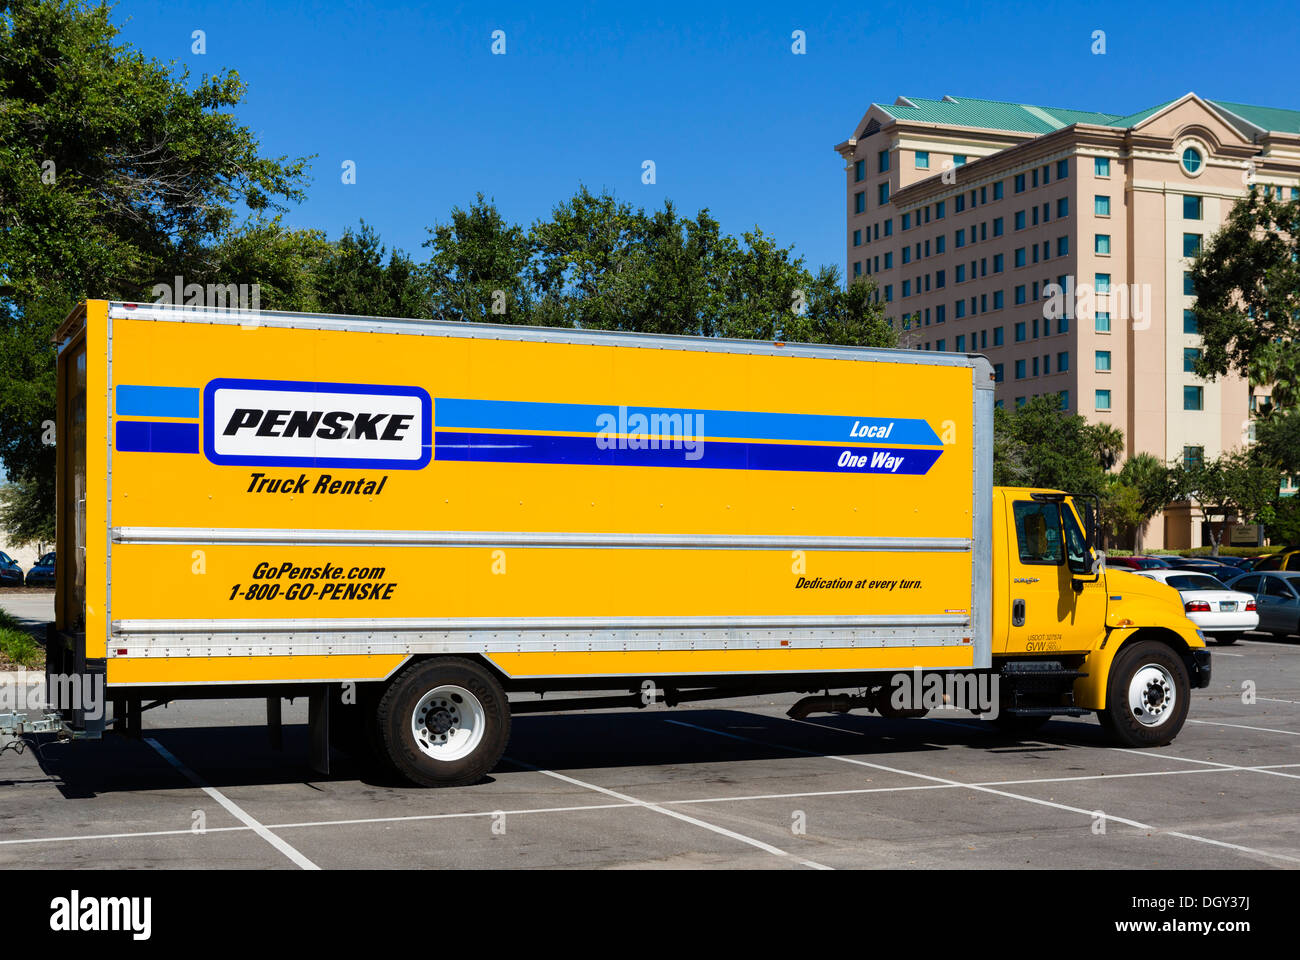 Location Penske Truck, Florida, USA Banque D'Images